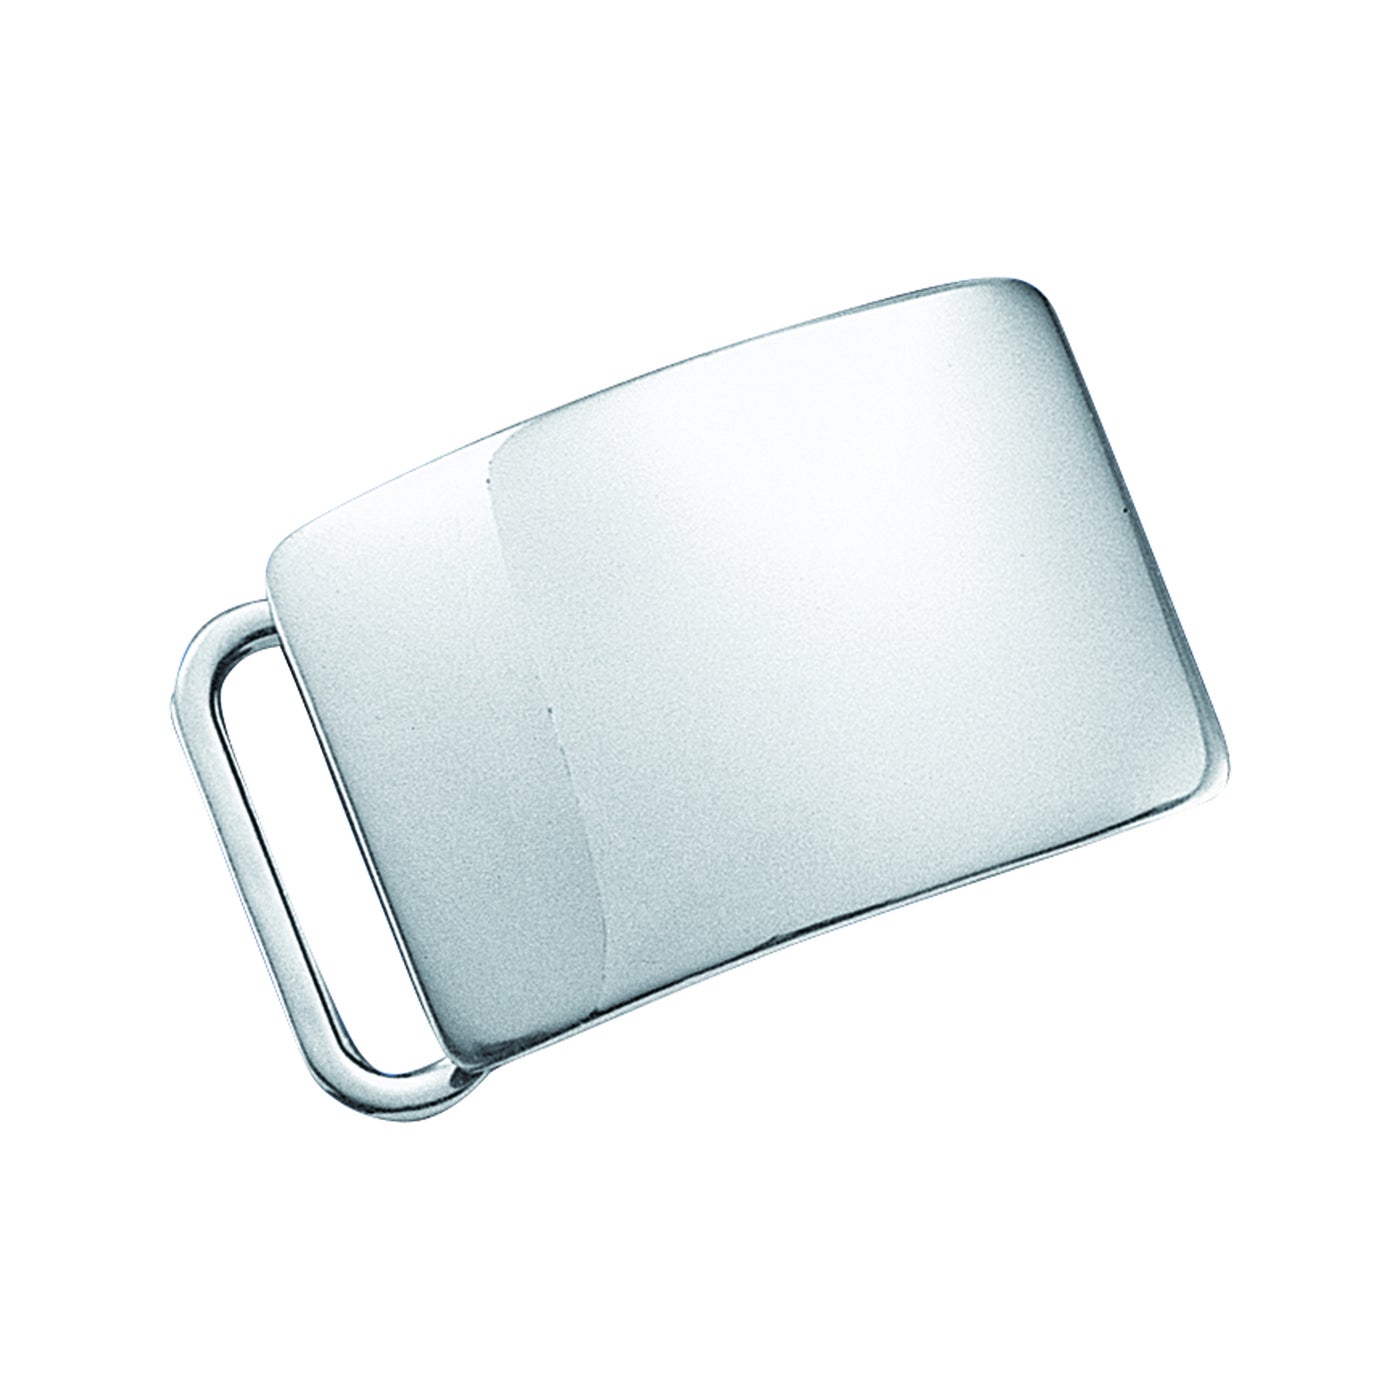 1.25 inch Square Silver Buckle (1 ¼”) - Nickel Free Belt Buckle